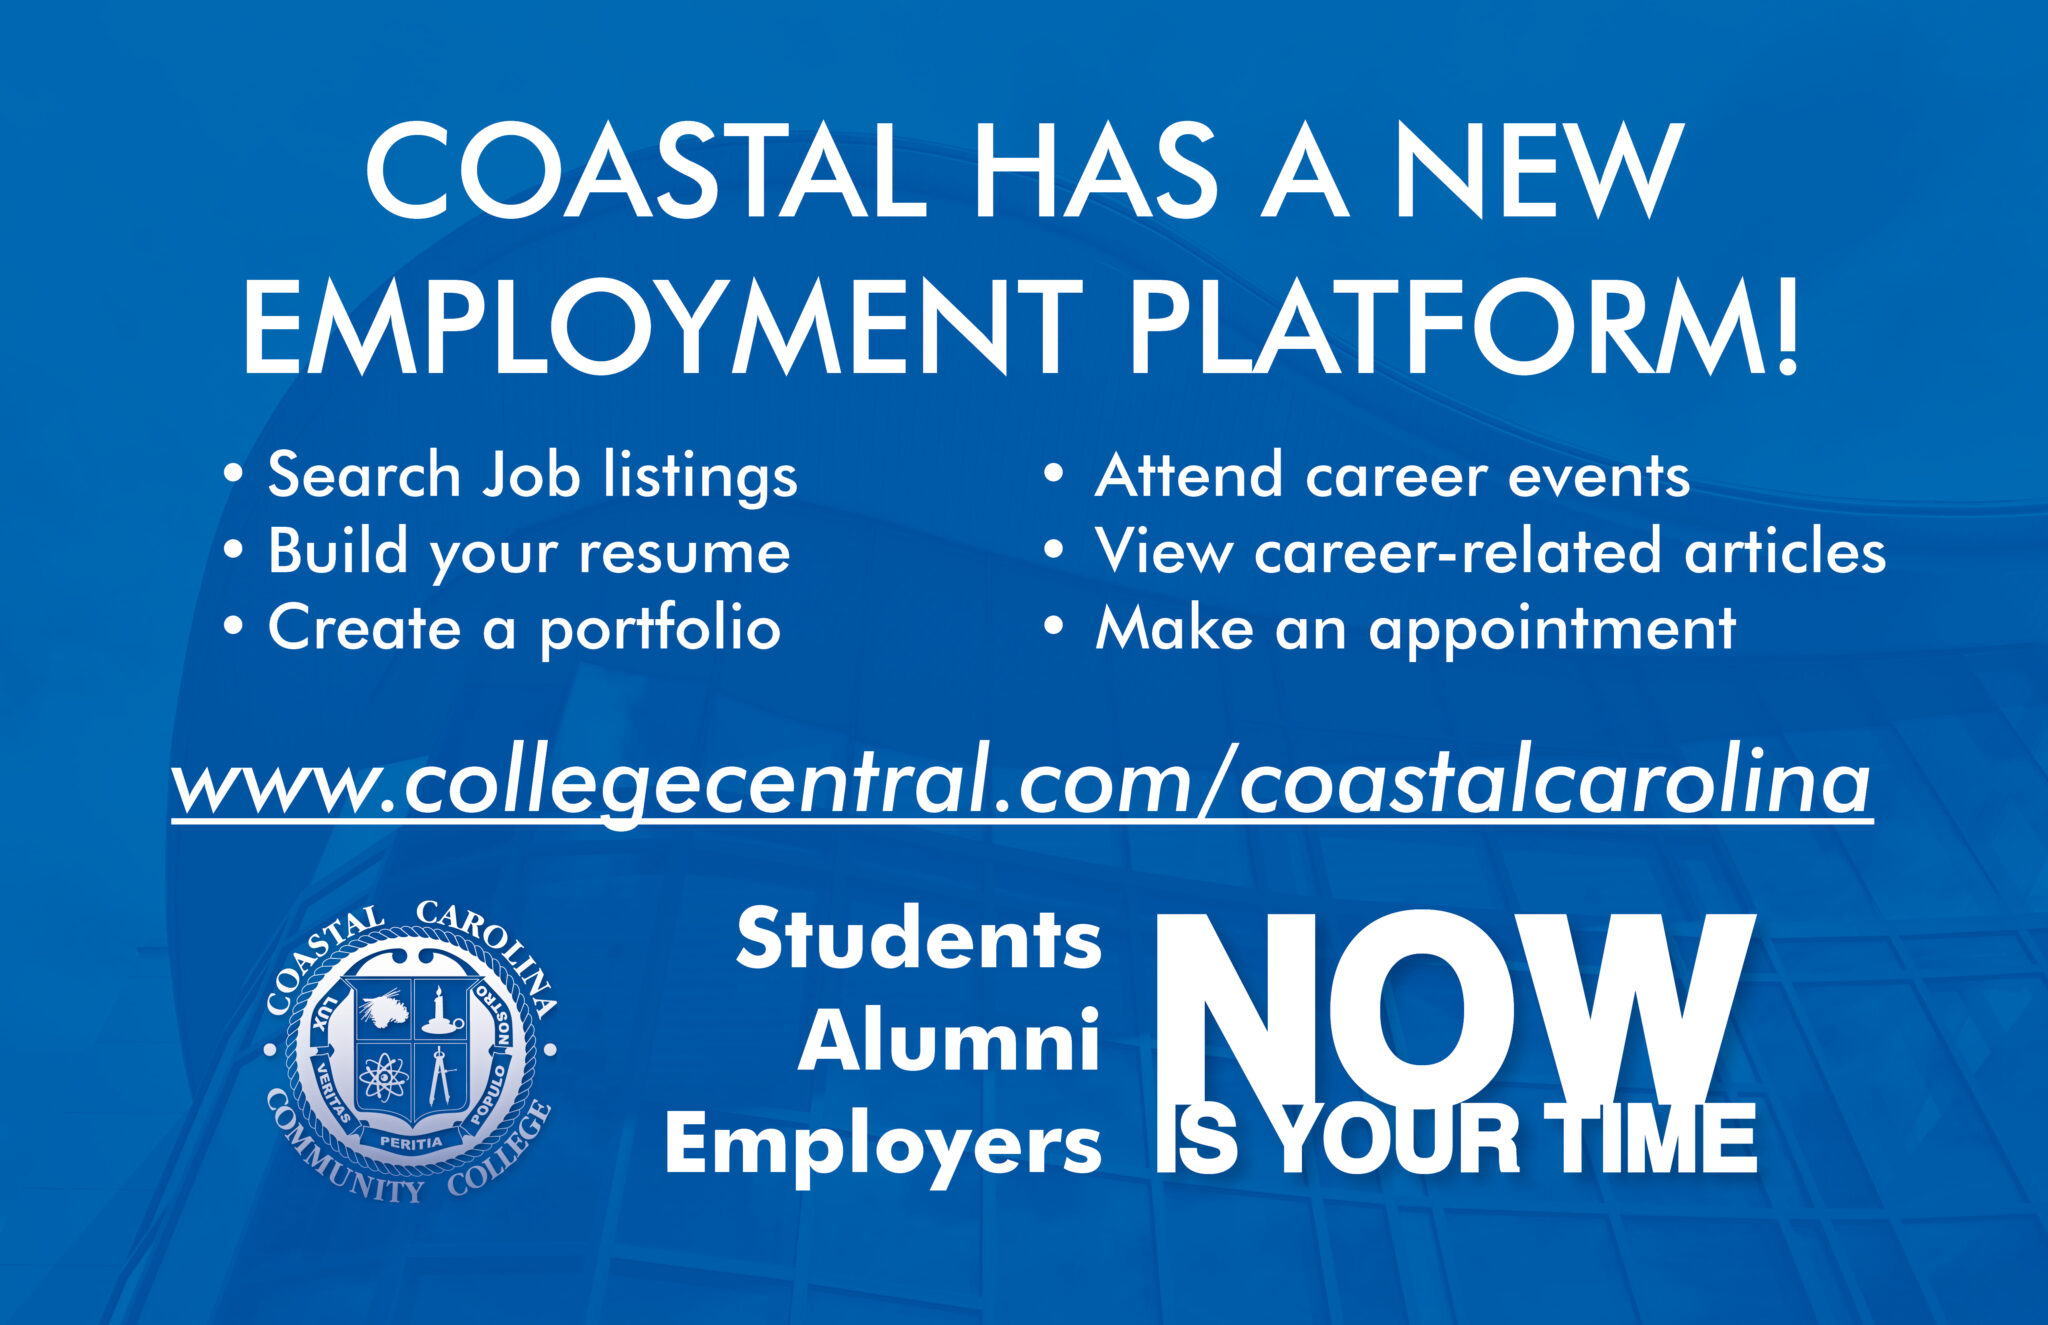 Jobs at coastal carolina community college